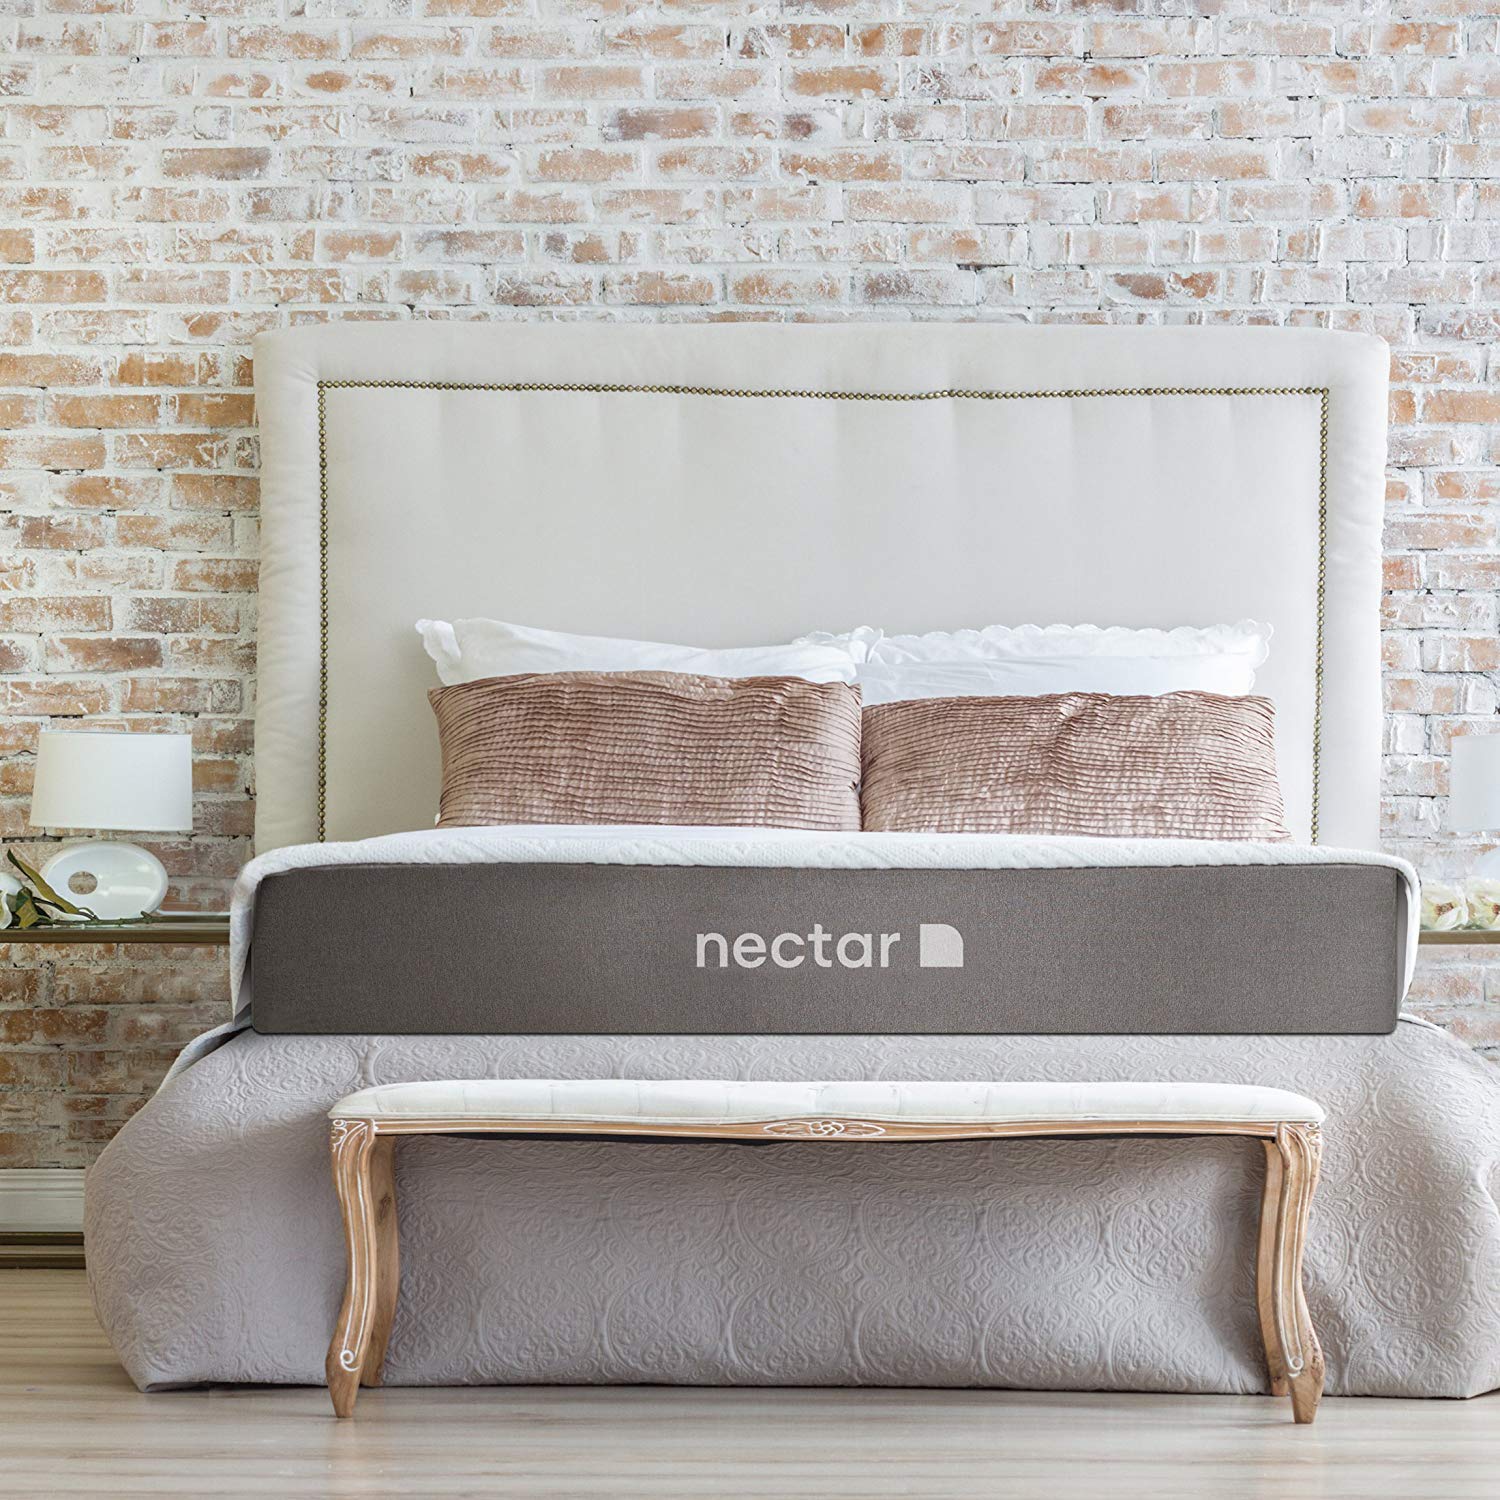 nectar sleep adjustable bed frame